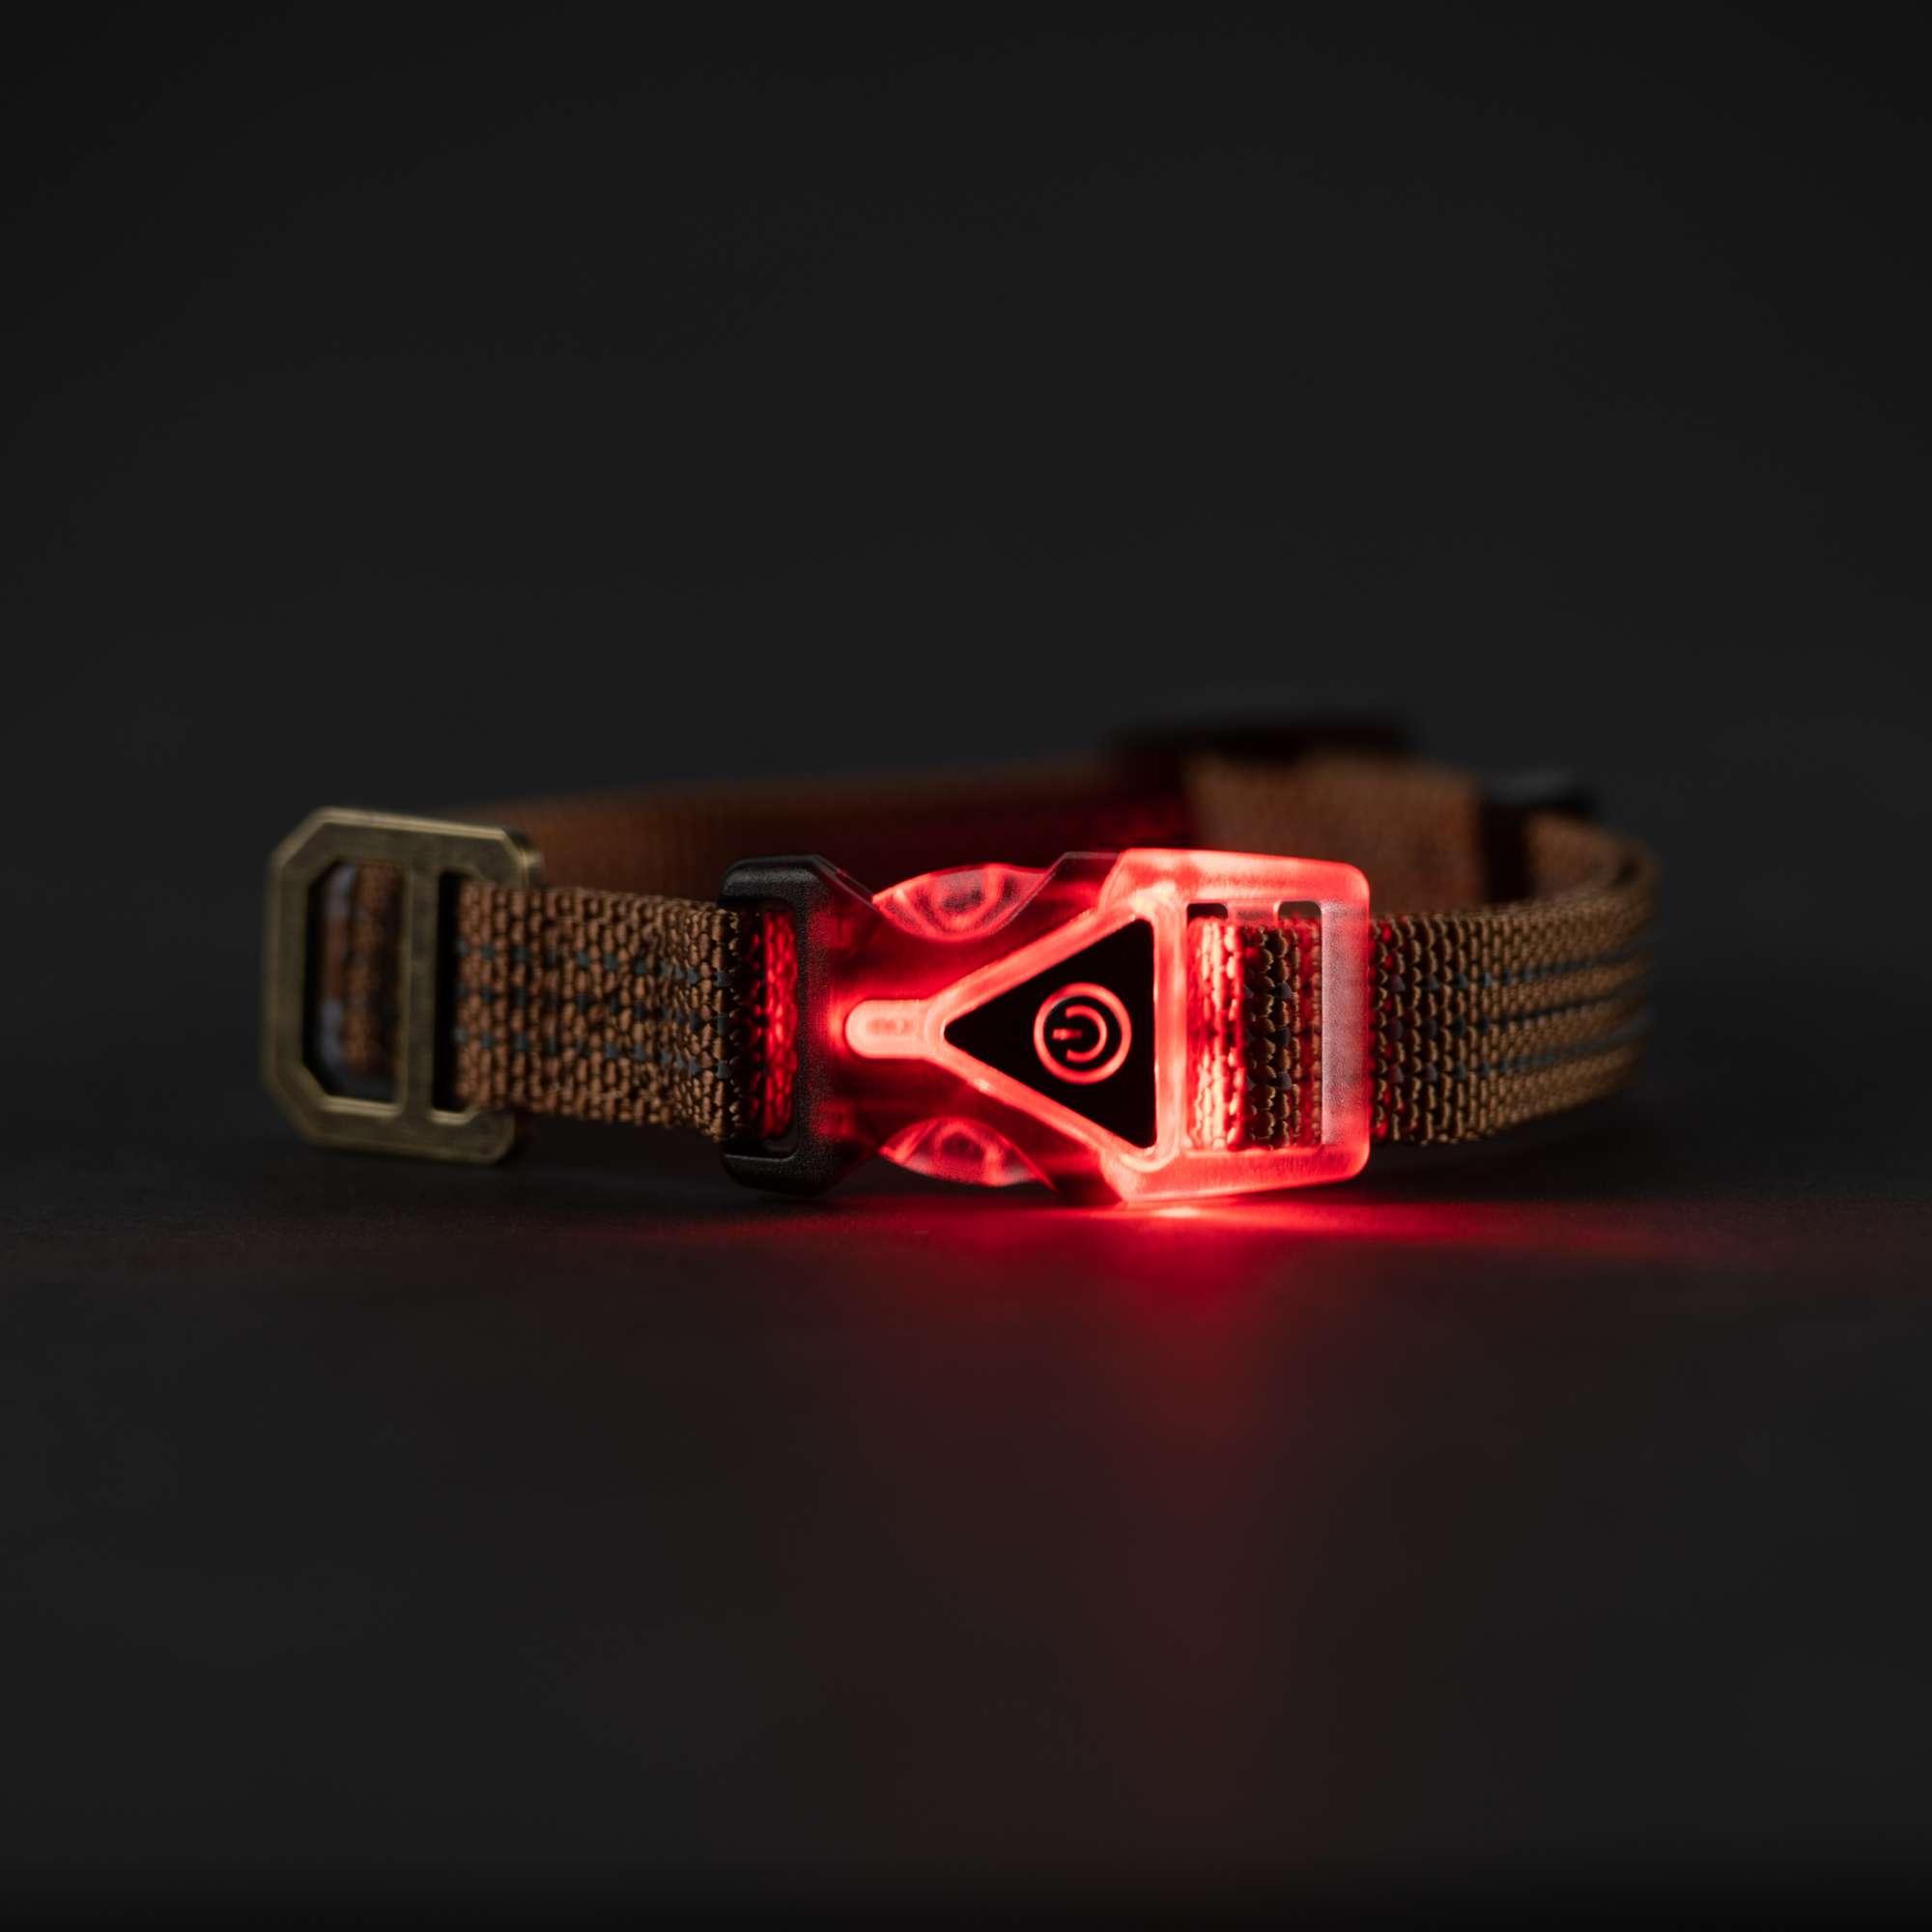 Carhartt Hundehalsband mit Roten LED, verstellbar